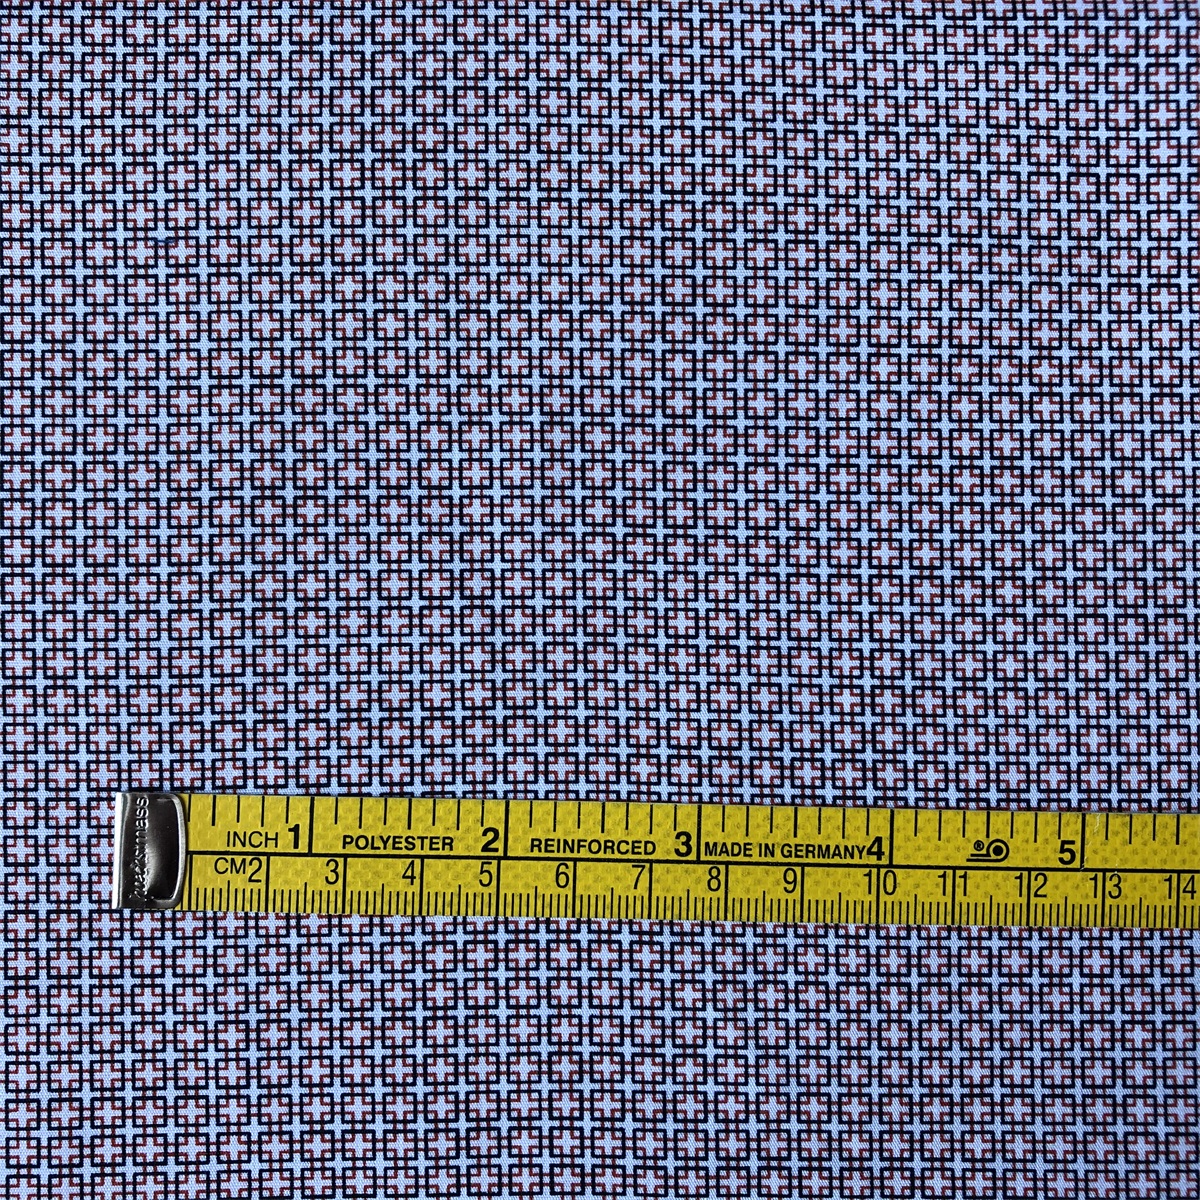 Sun-rising Textile Cotton Printed fabric 40S compact yarn men's casual shirts 100% cotton poplin printed shirts woven fabric